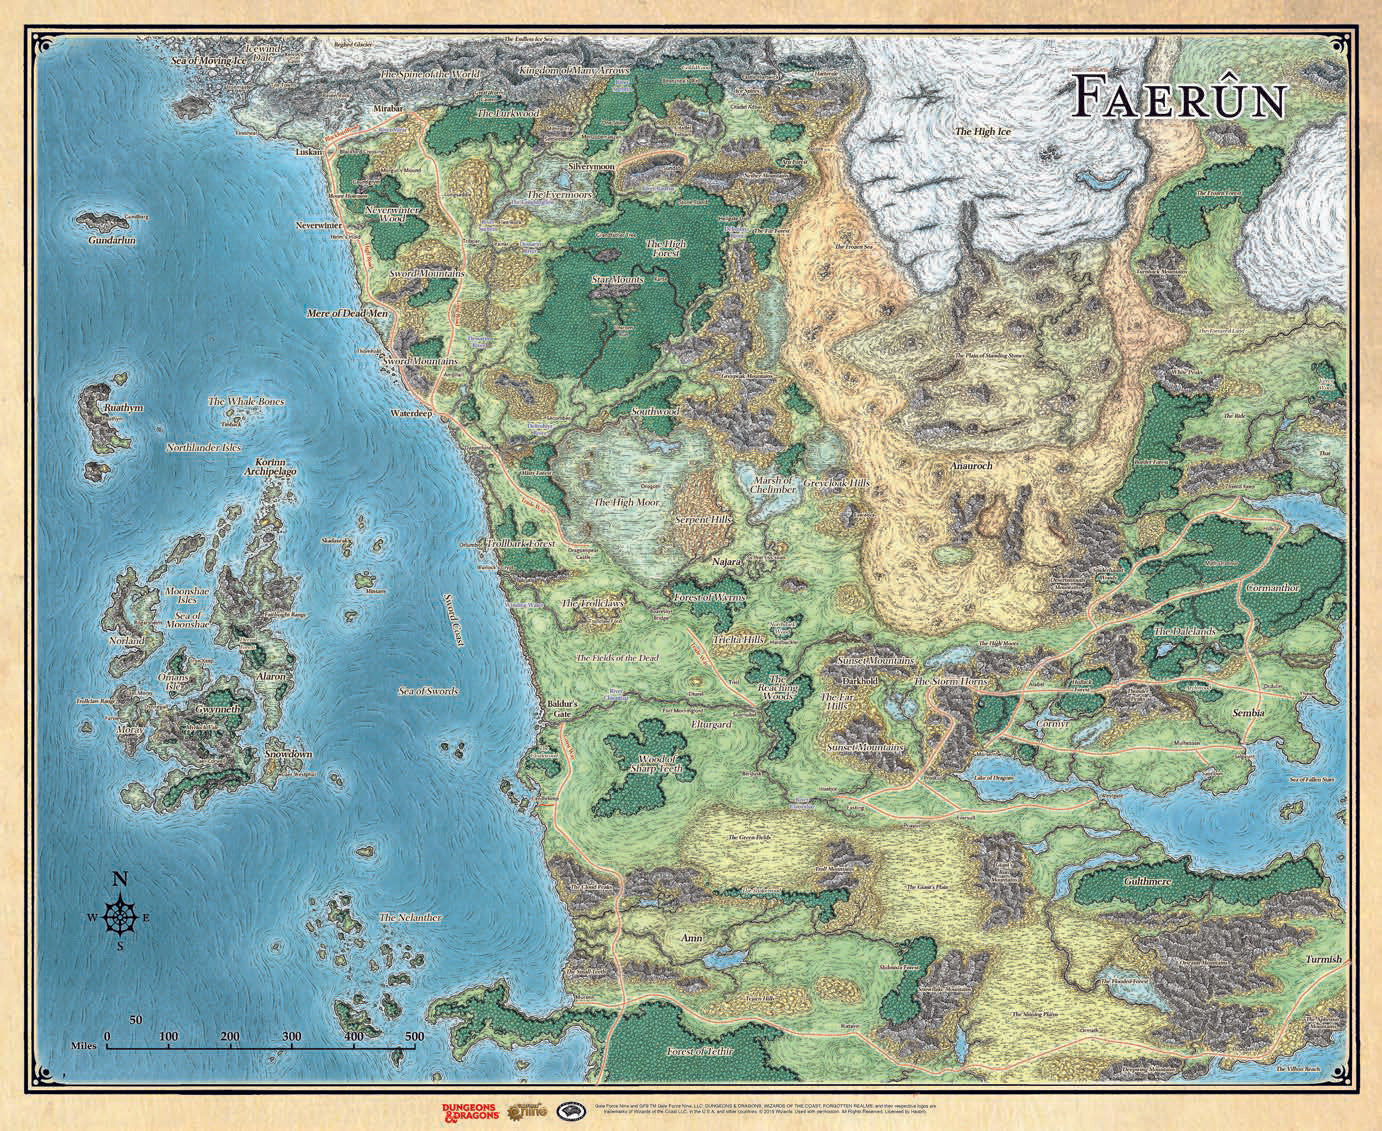 D&D RPG: Sword Coast Adventure Guide Faerun Map